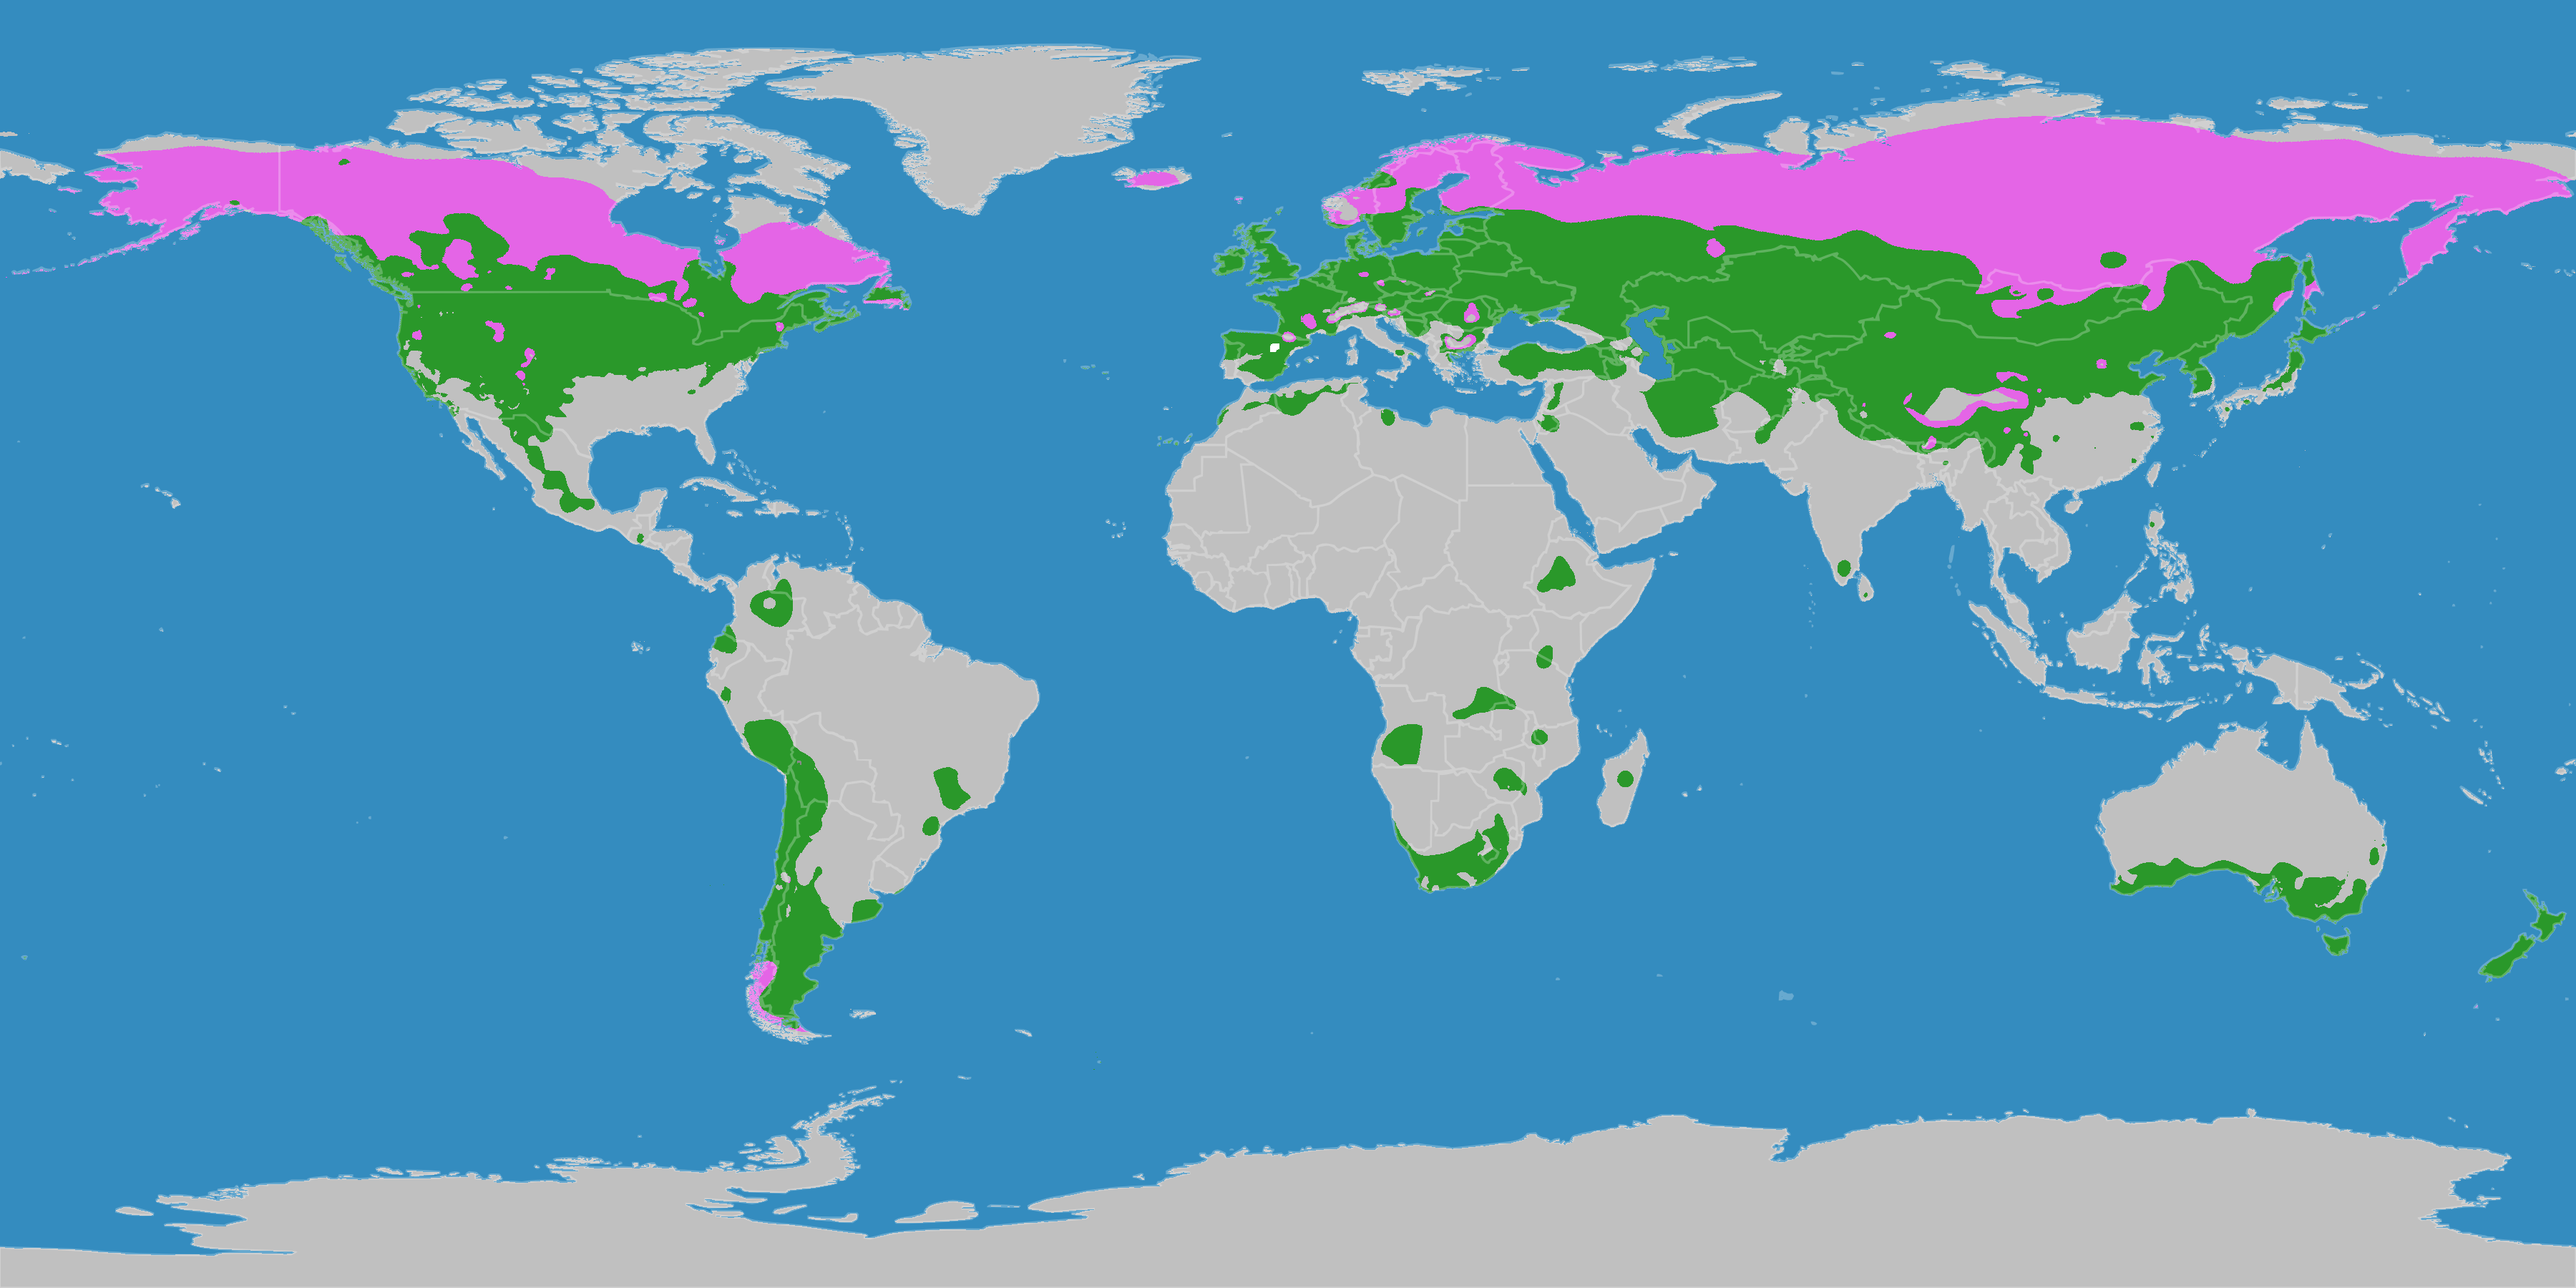 File:Klimagürtel-der-erde-gemäßigte-zone.png - Wikimedia Commons